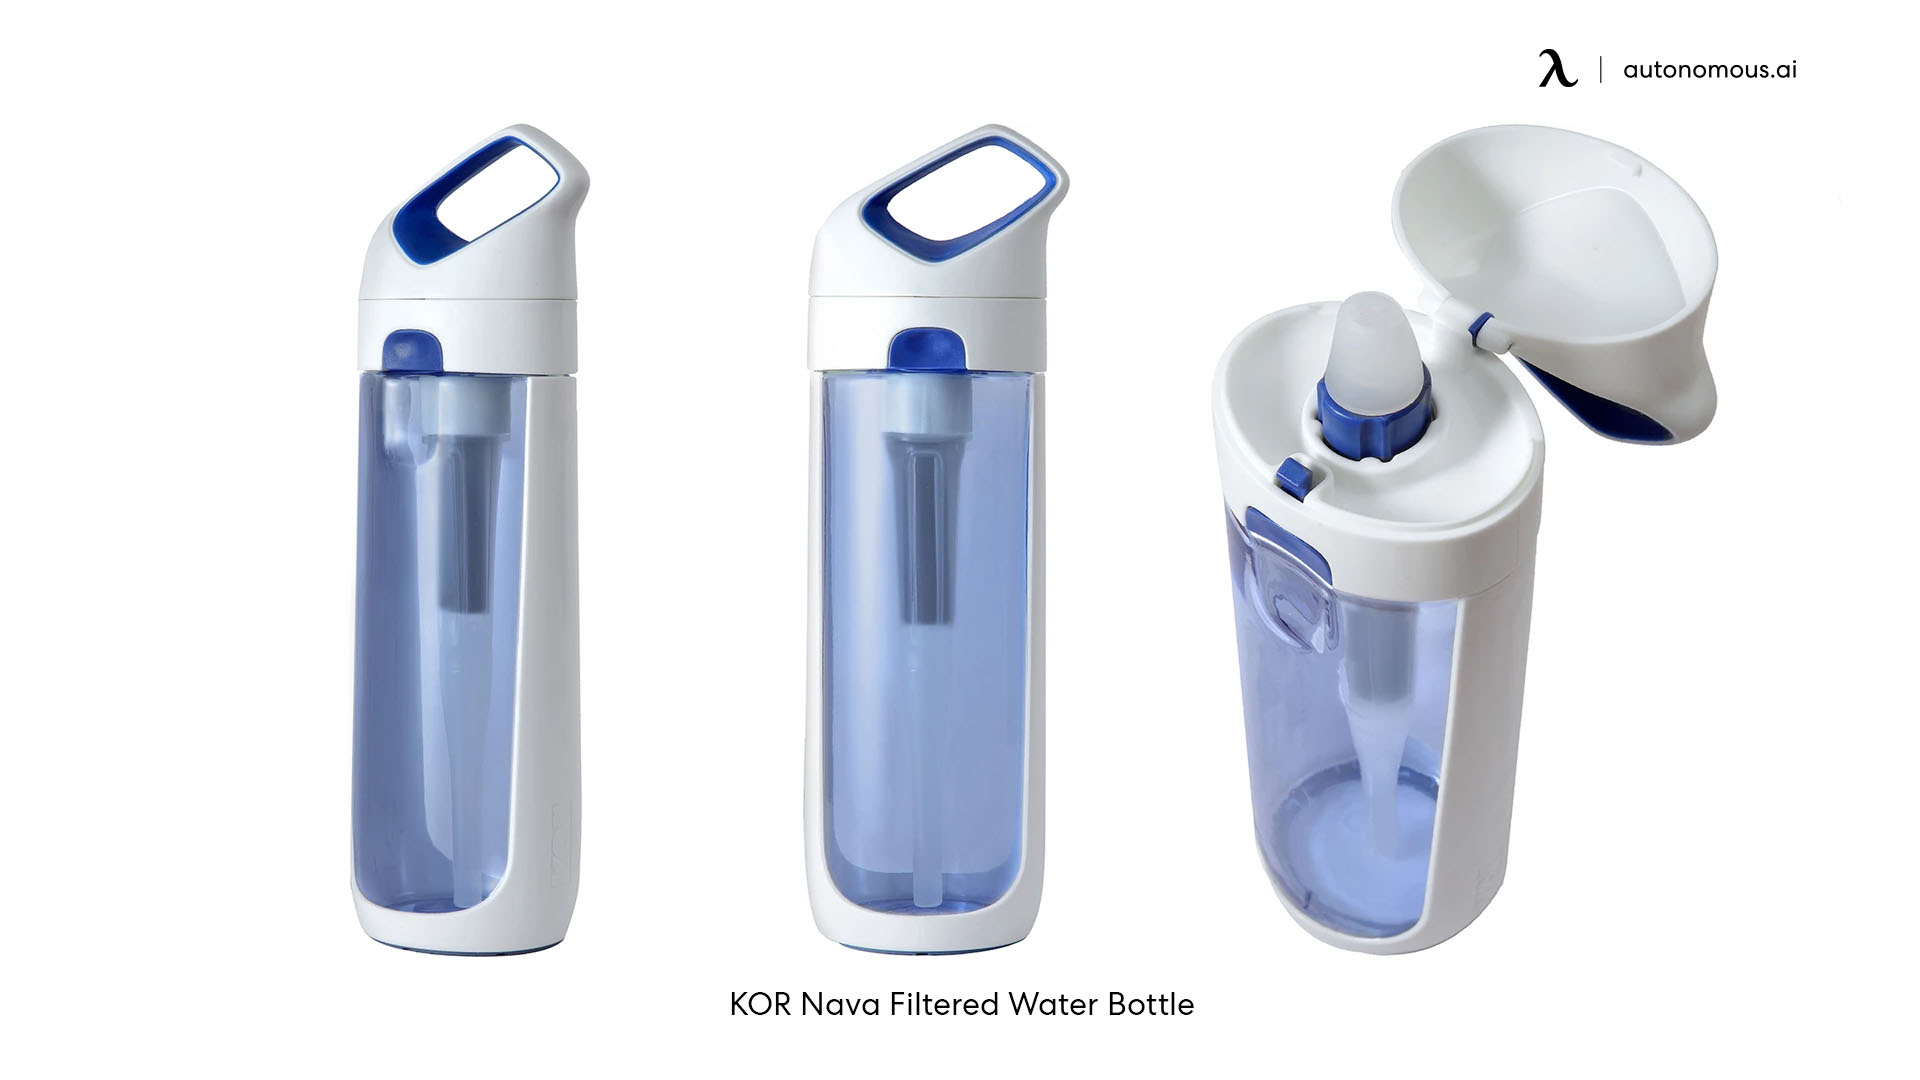 KOR Nava filtered water bottle